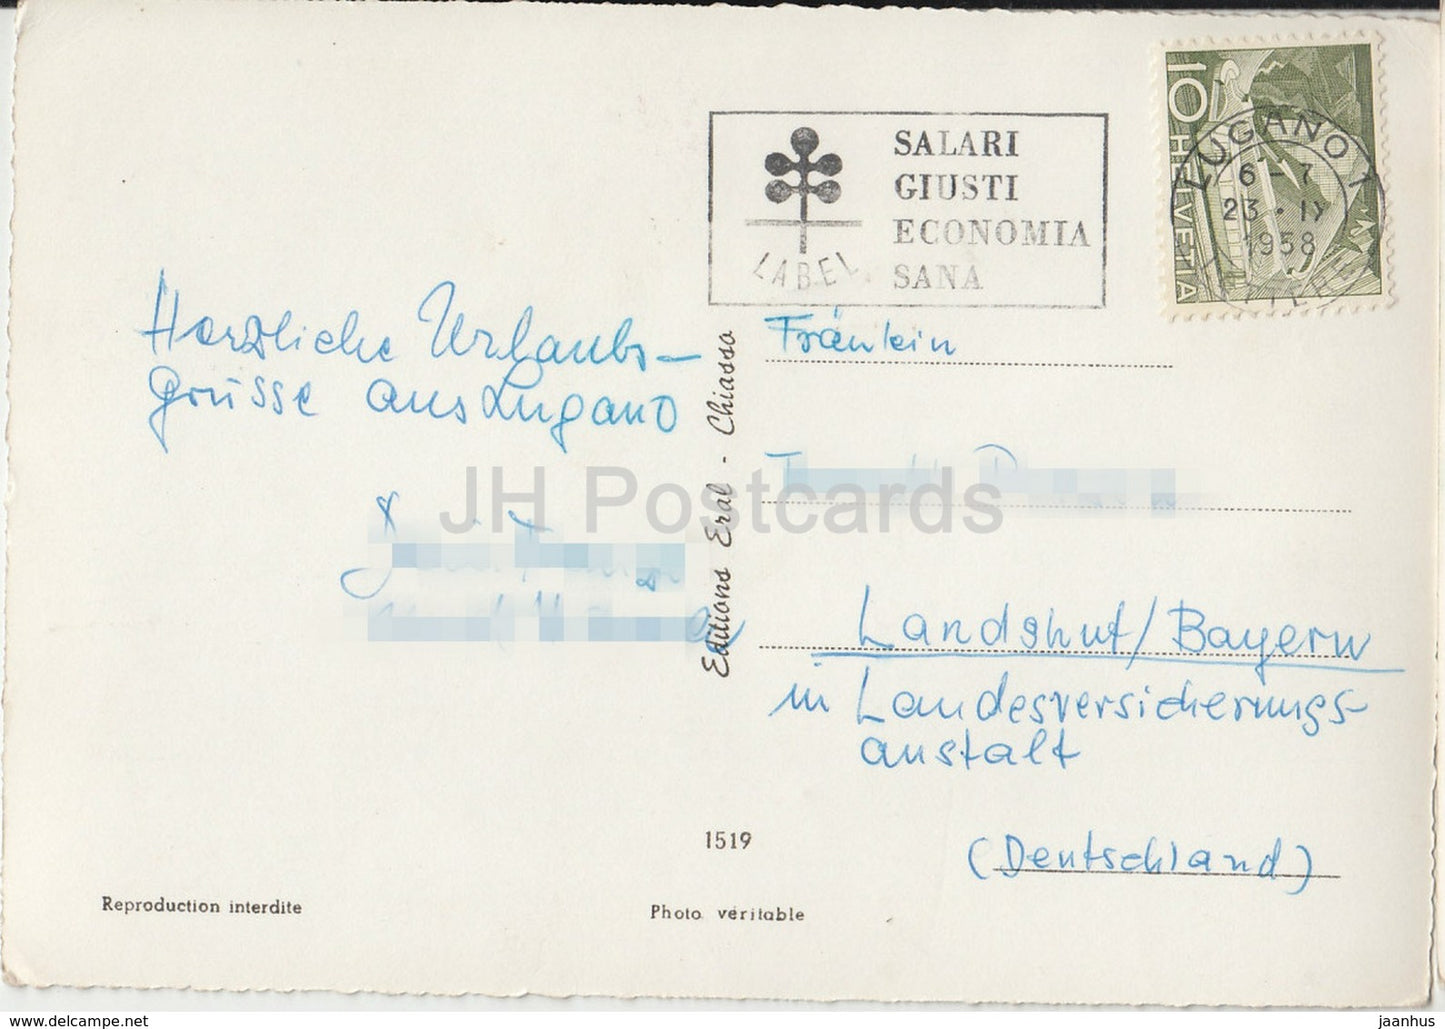 Lago di Lugano - lake - 1519 - Switzerland - old postcard - 1958 - used